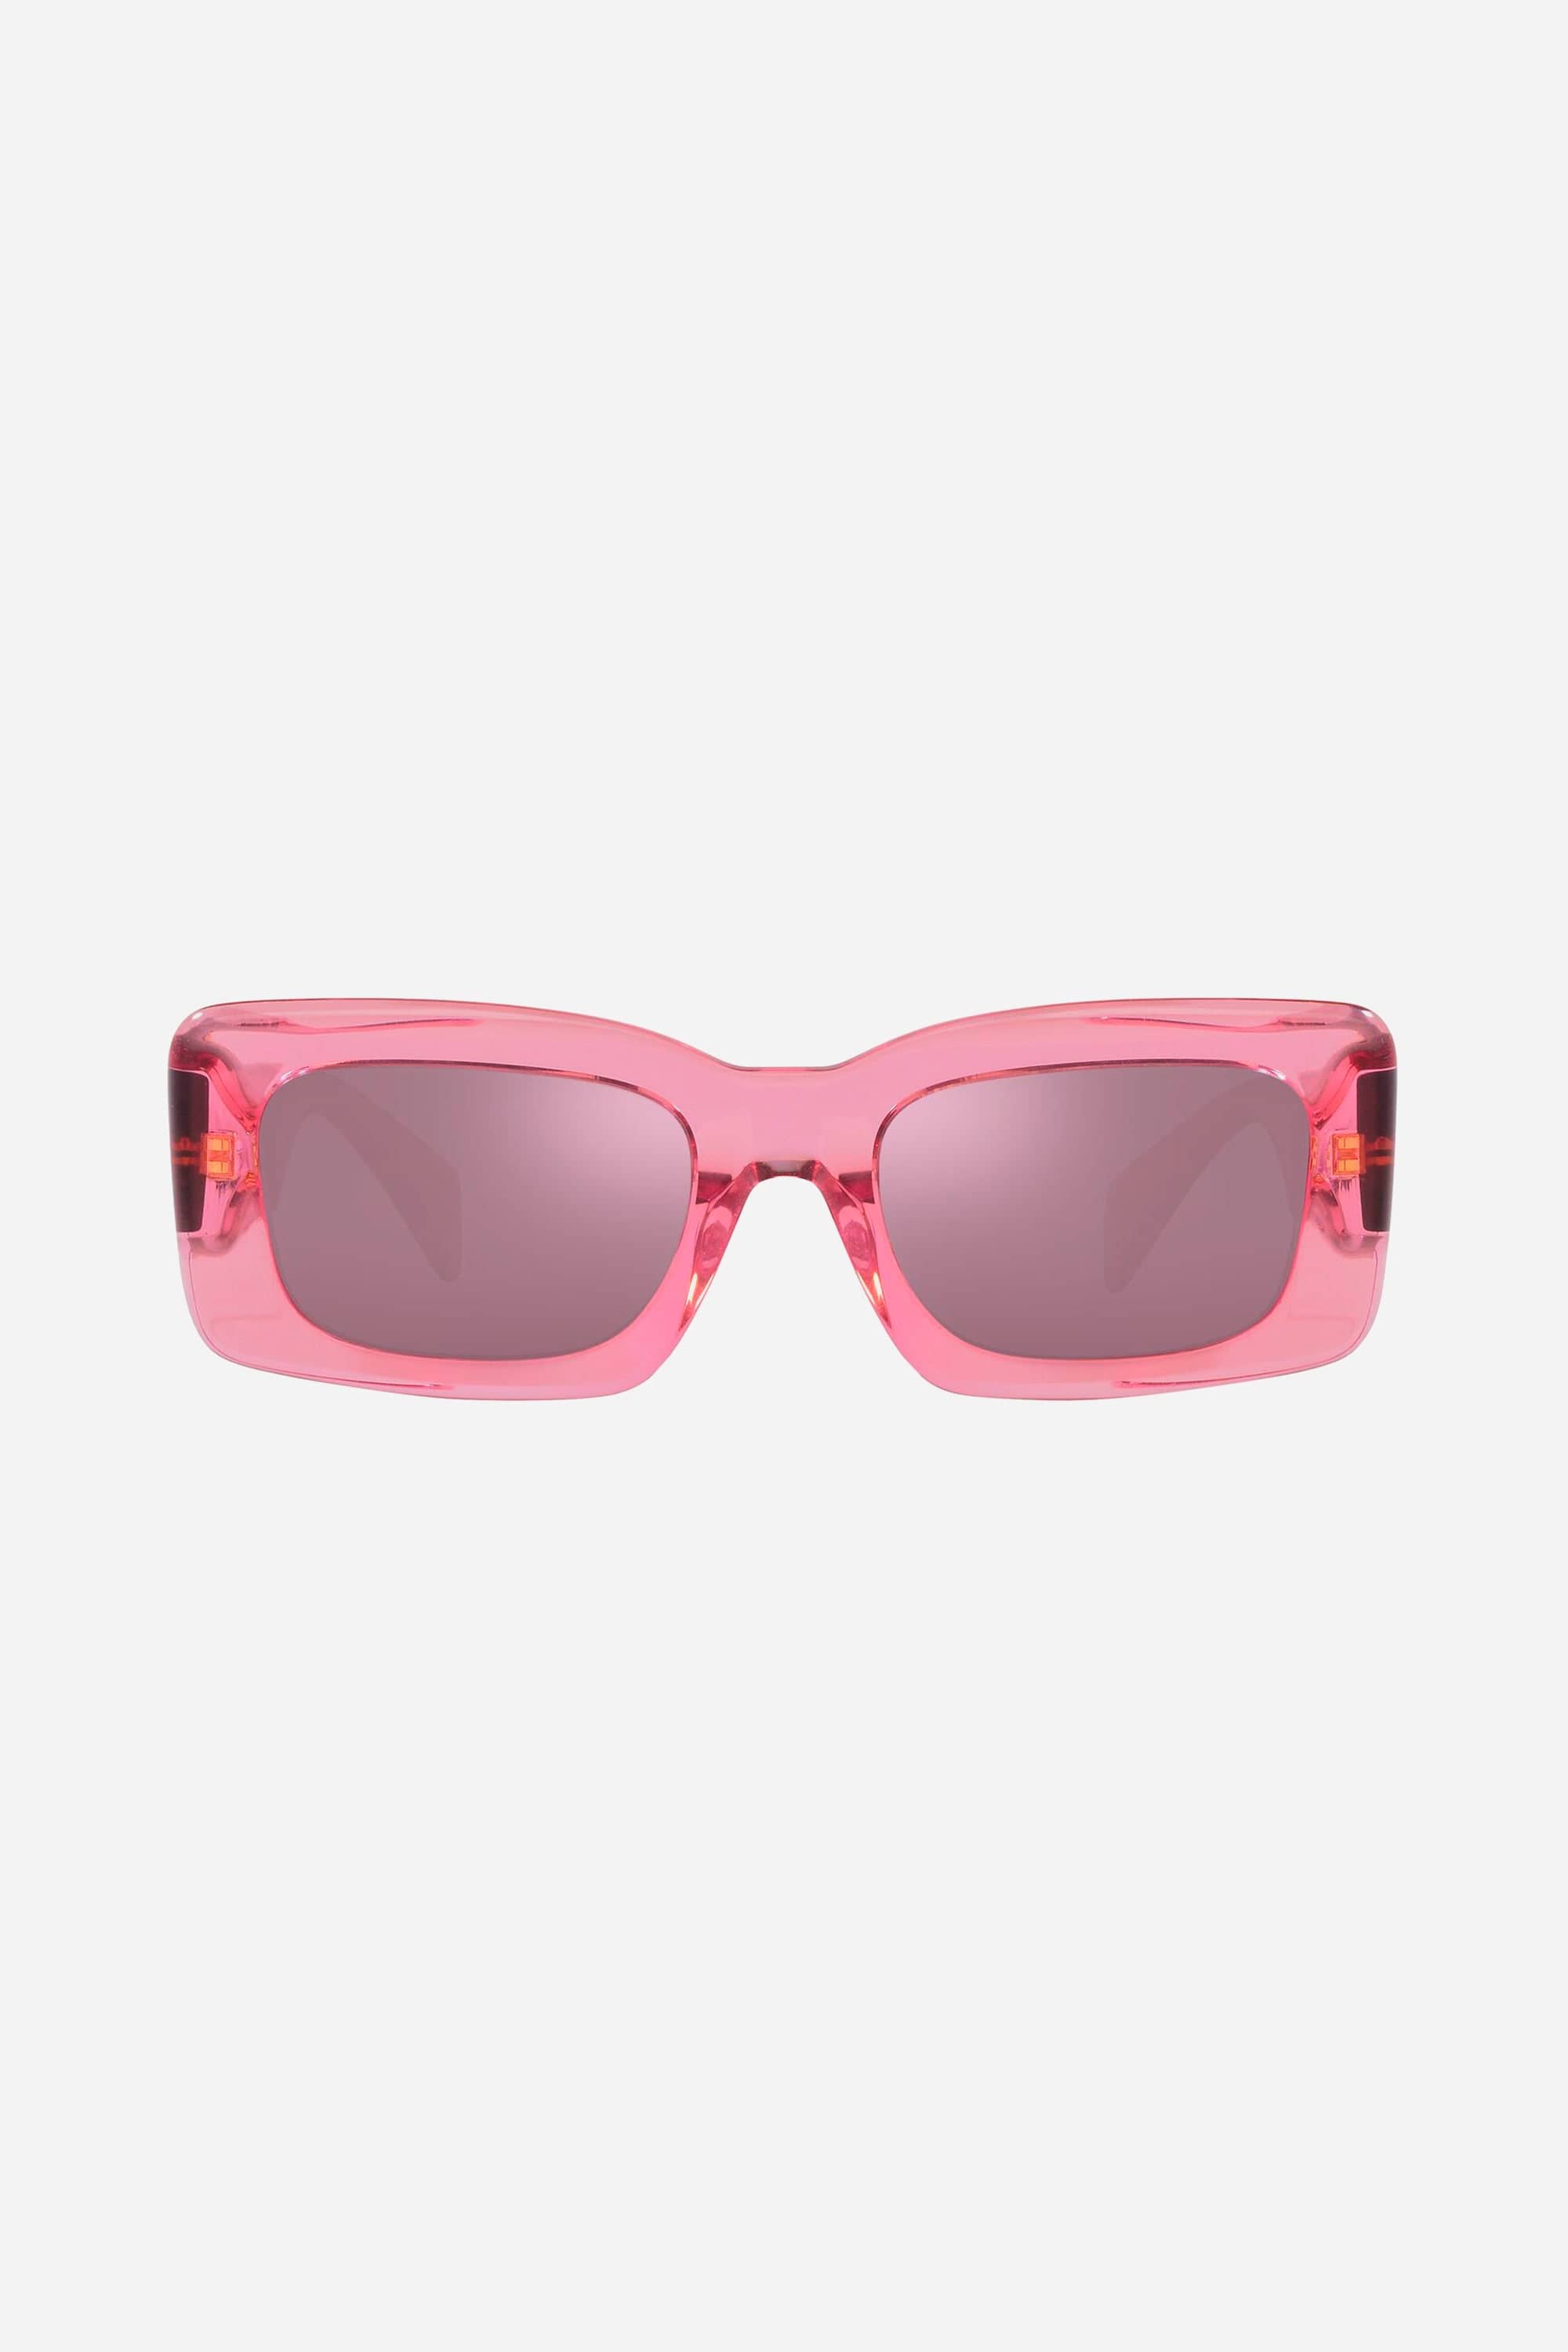 Versace squared transparent pink sunglasses - Eyewear Club